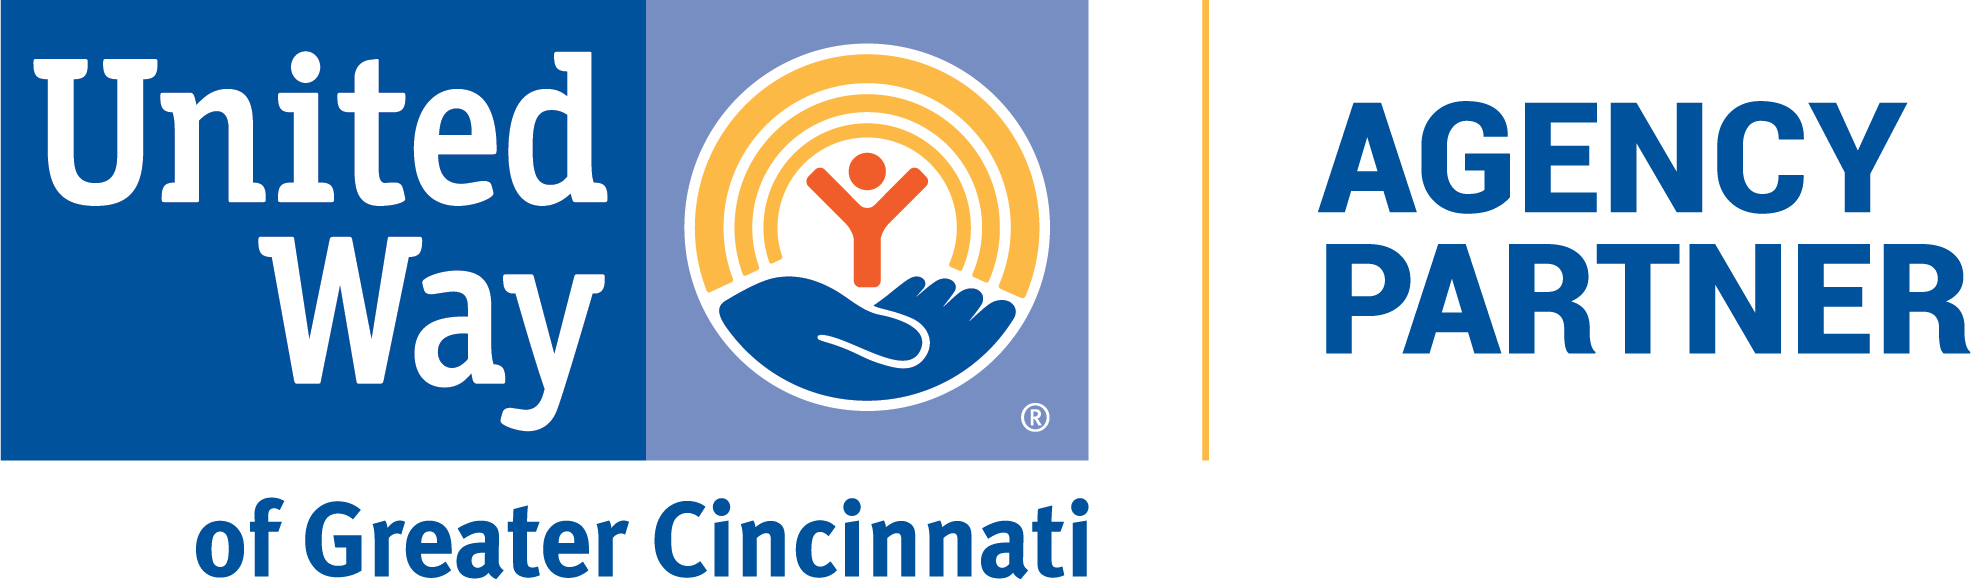 United Way Greater Cincinnati Logo